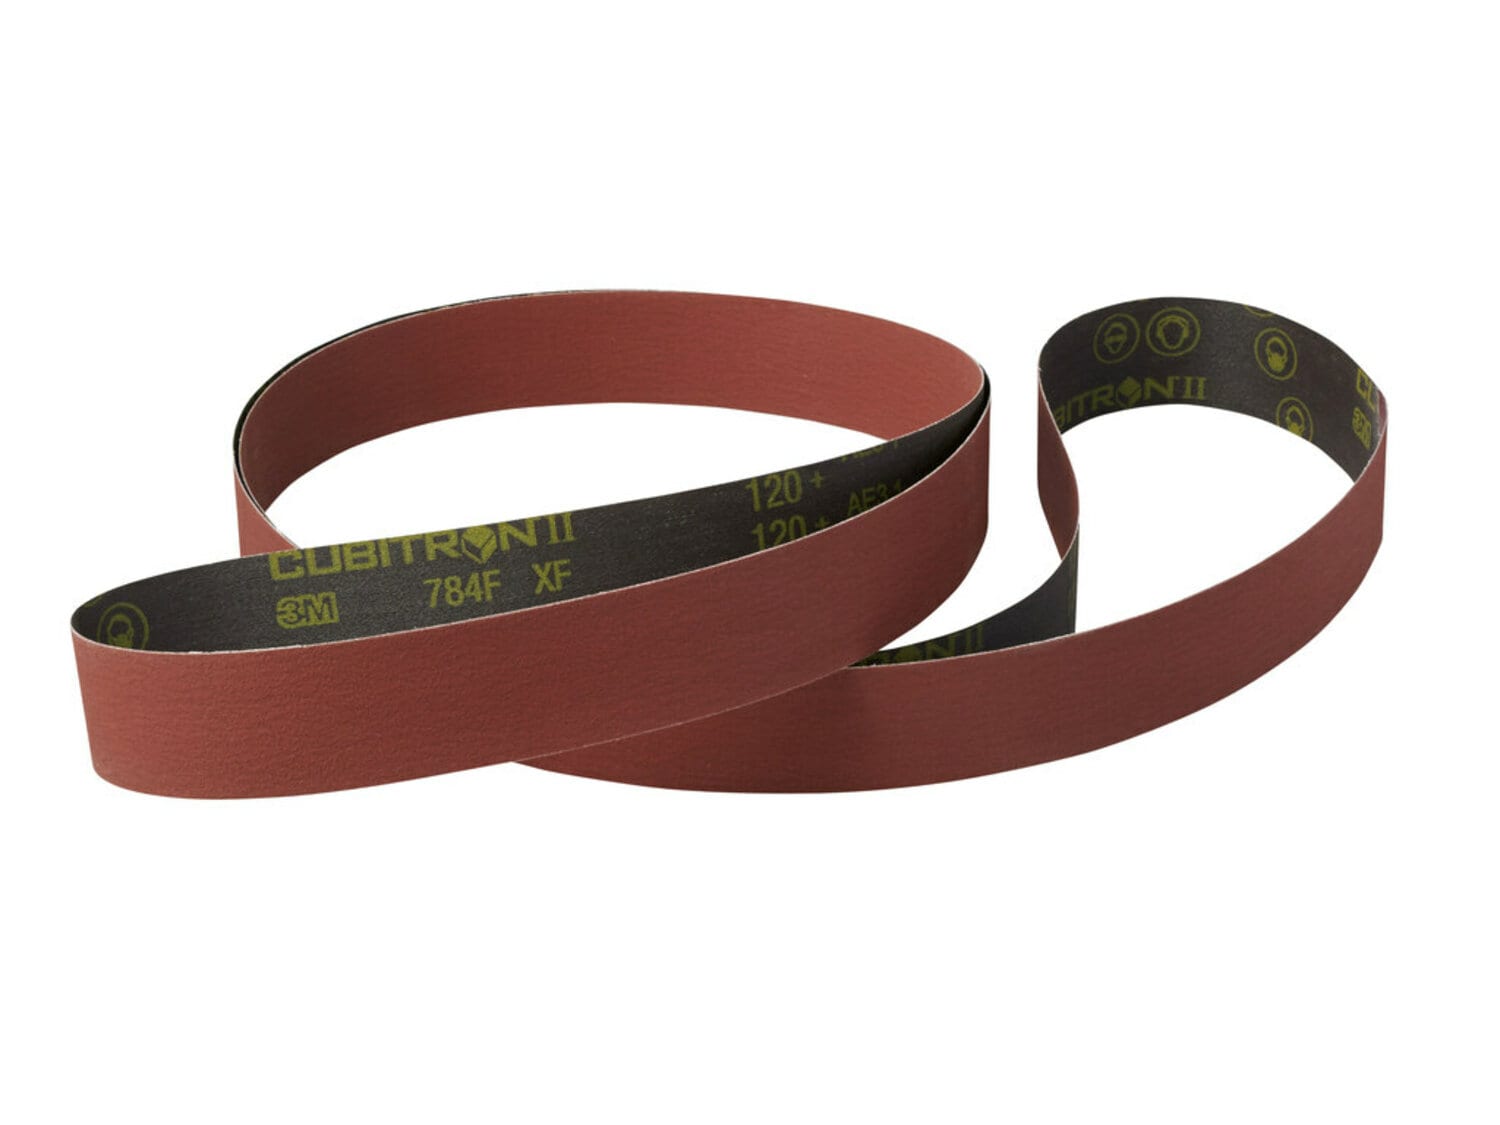 7100232696 - 3M Cubitron ll Cloth Belt 784F, 180+ YF-weight, 13 in x 75 in, Film-
lok, Single-flex